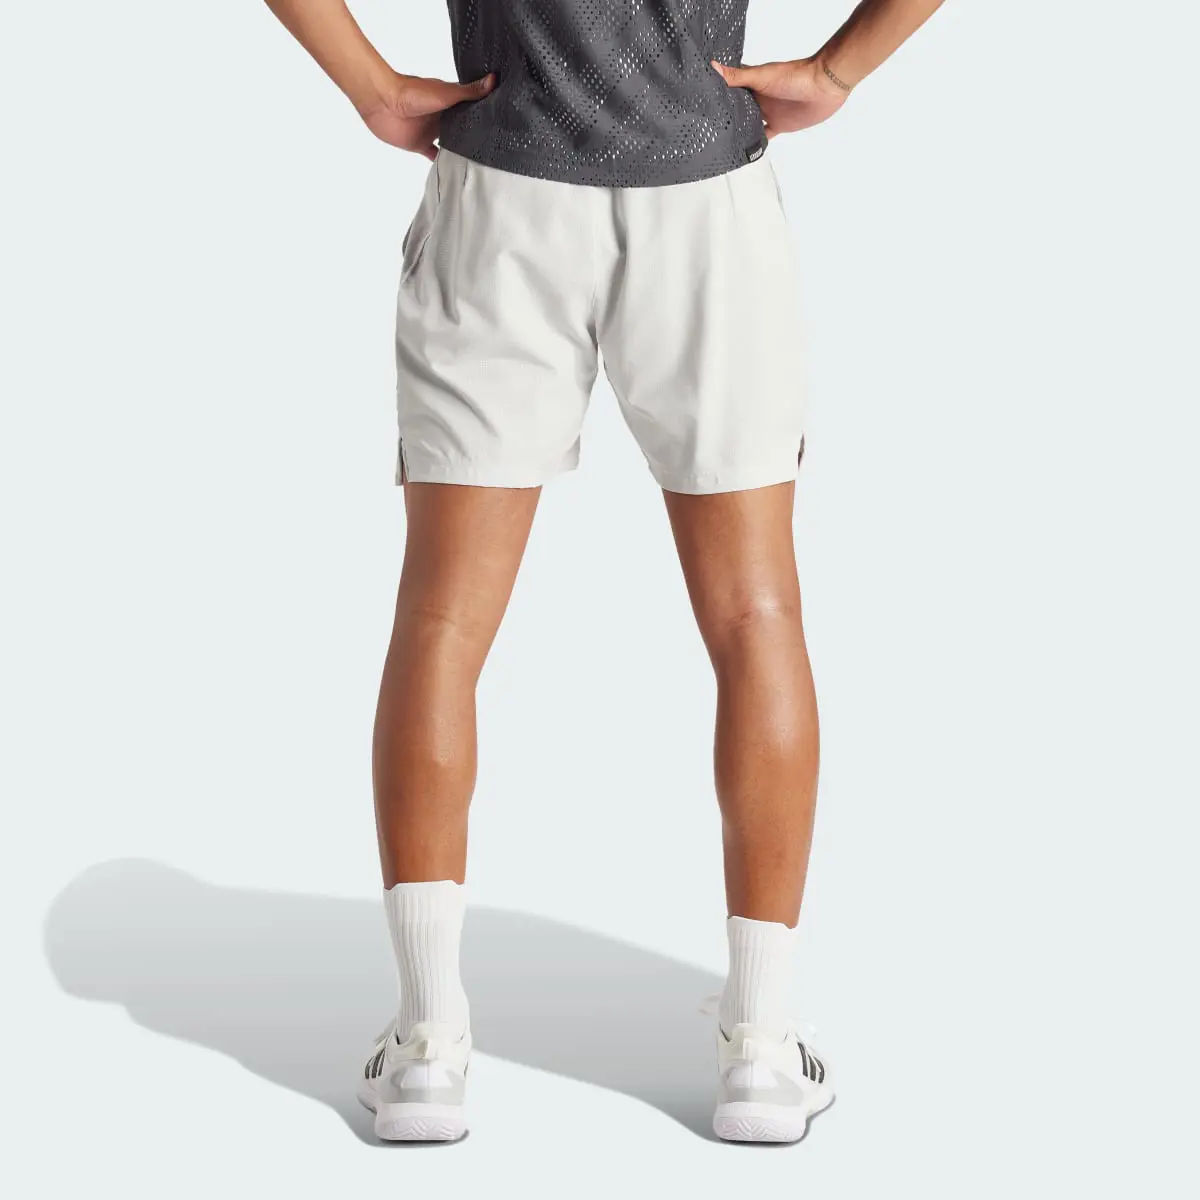 Adidas Tennis HEAT.RDY Shorts and Inner Shorts Set. 3